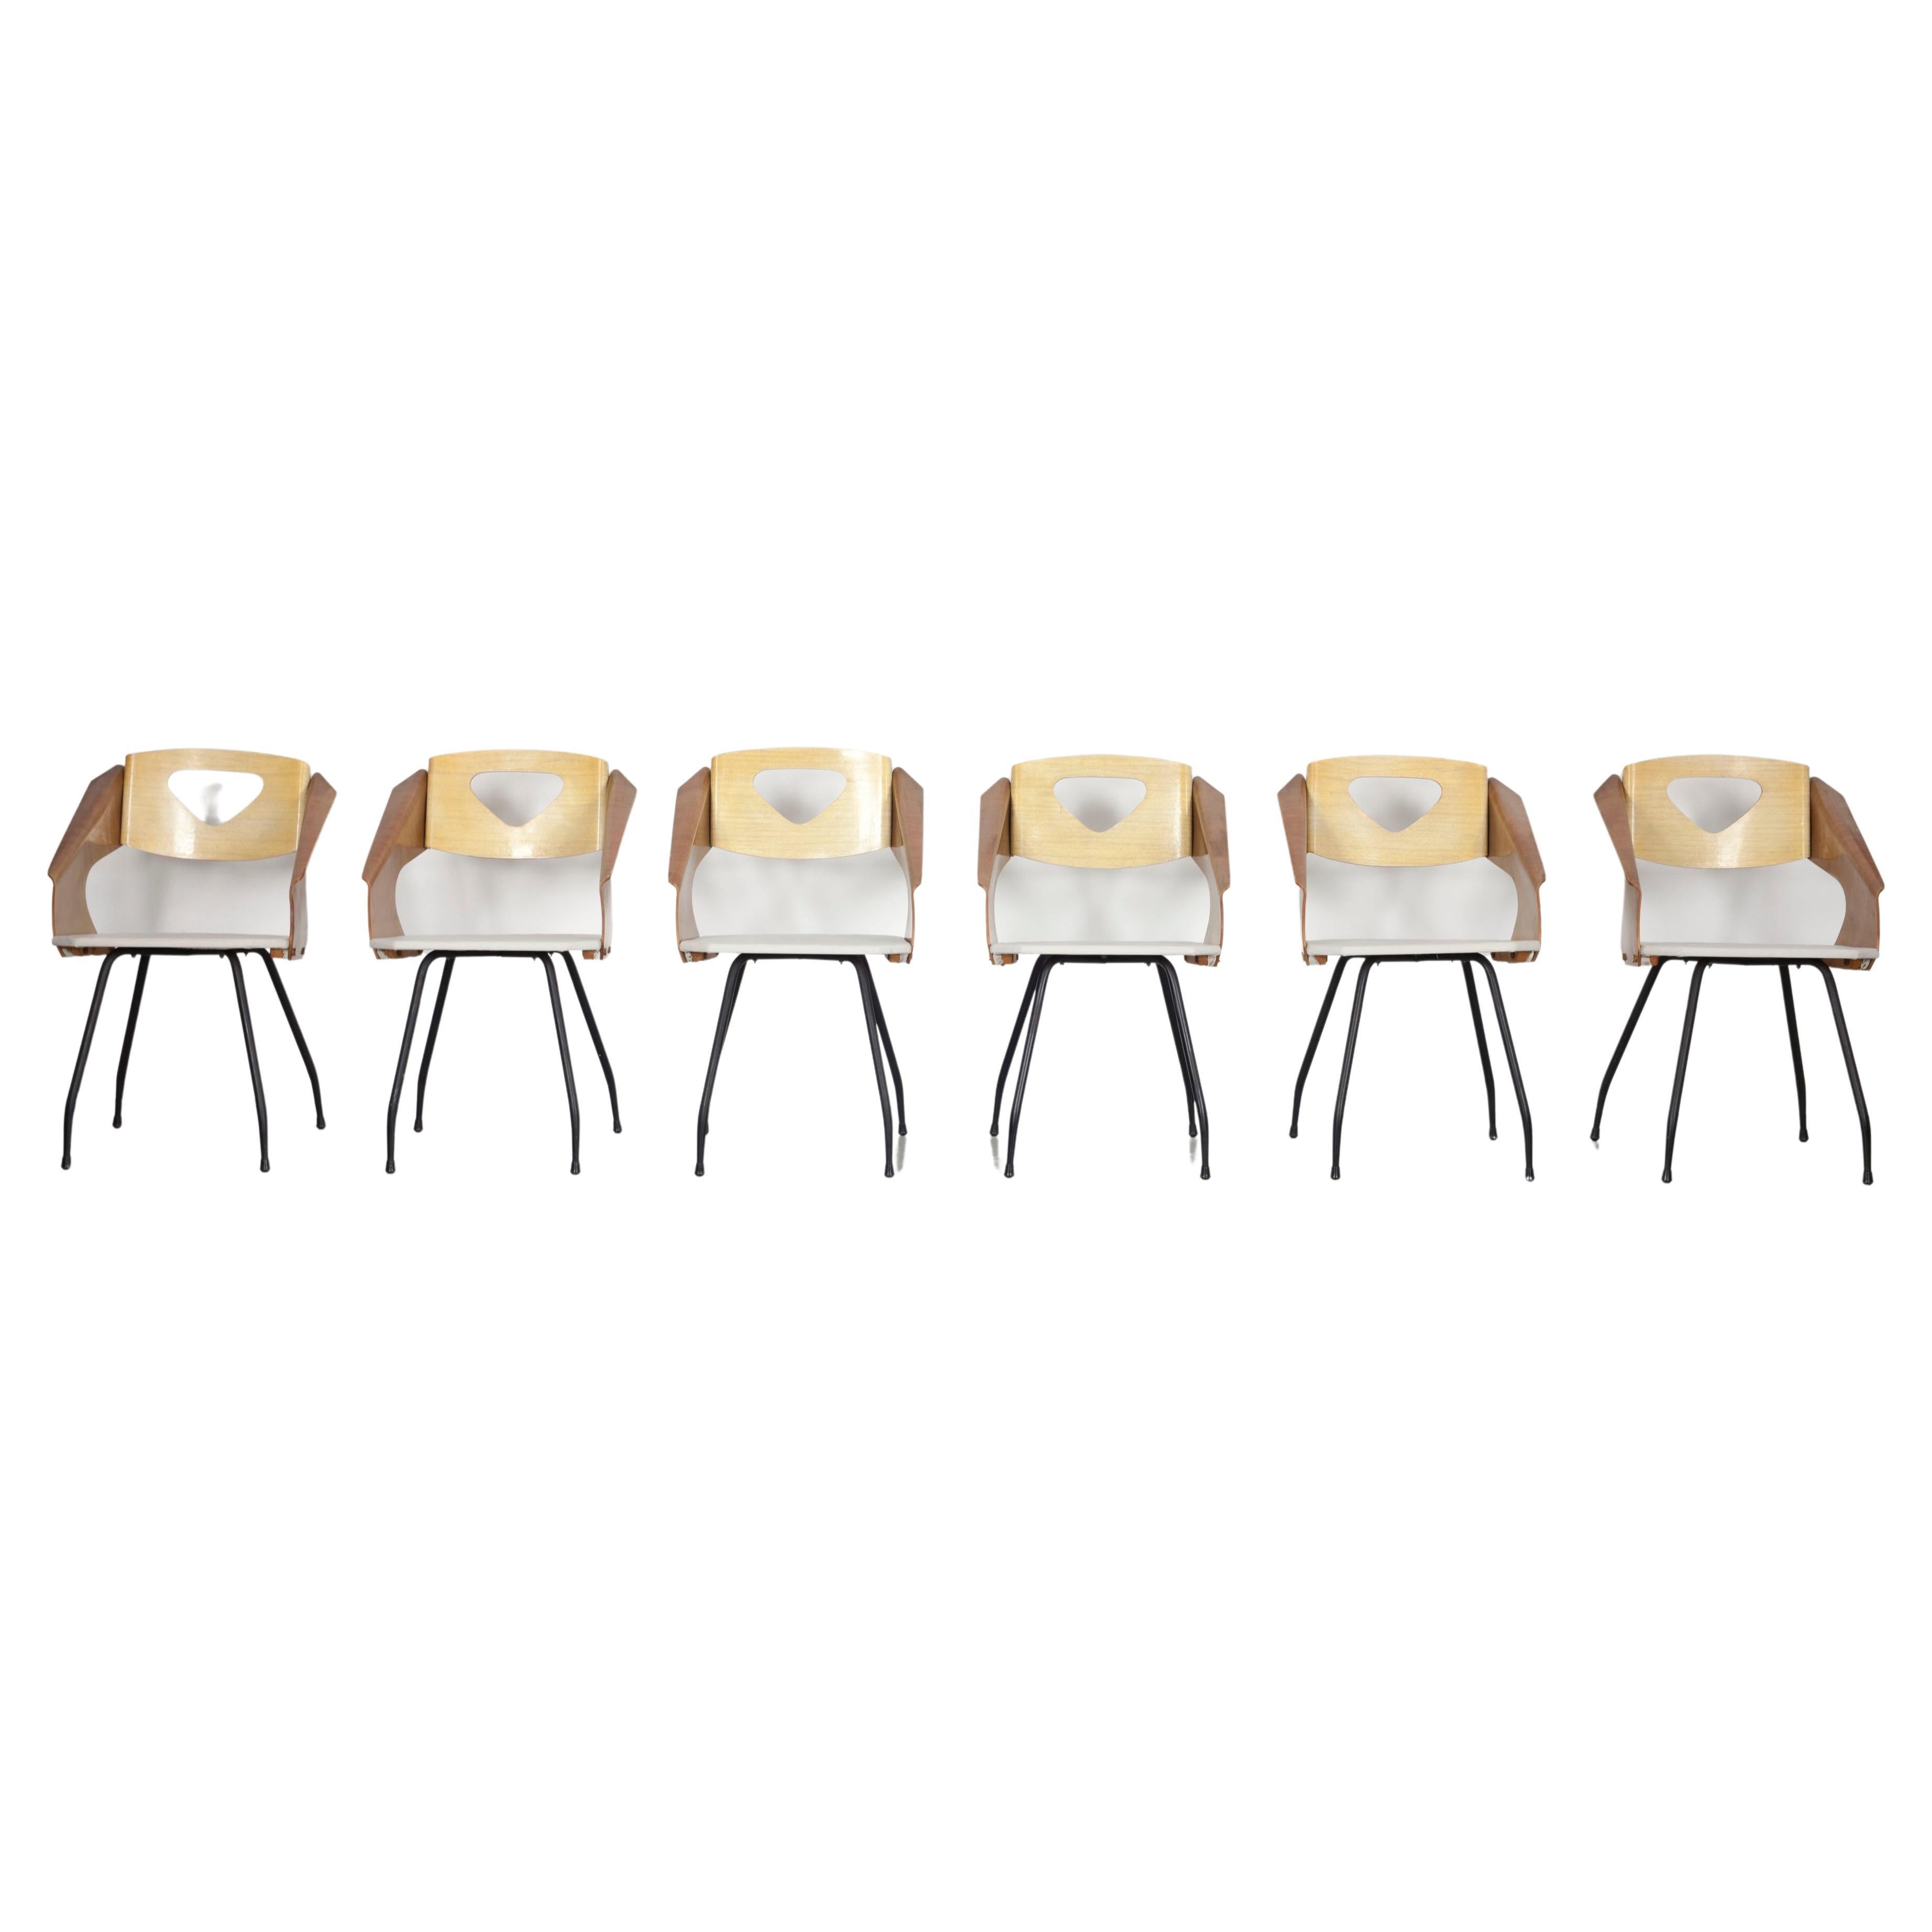 Set of 6 plywood chairs, 1950s, Carlo Ratti, Italy, Industria Legni Curvati For Sale